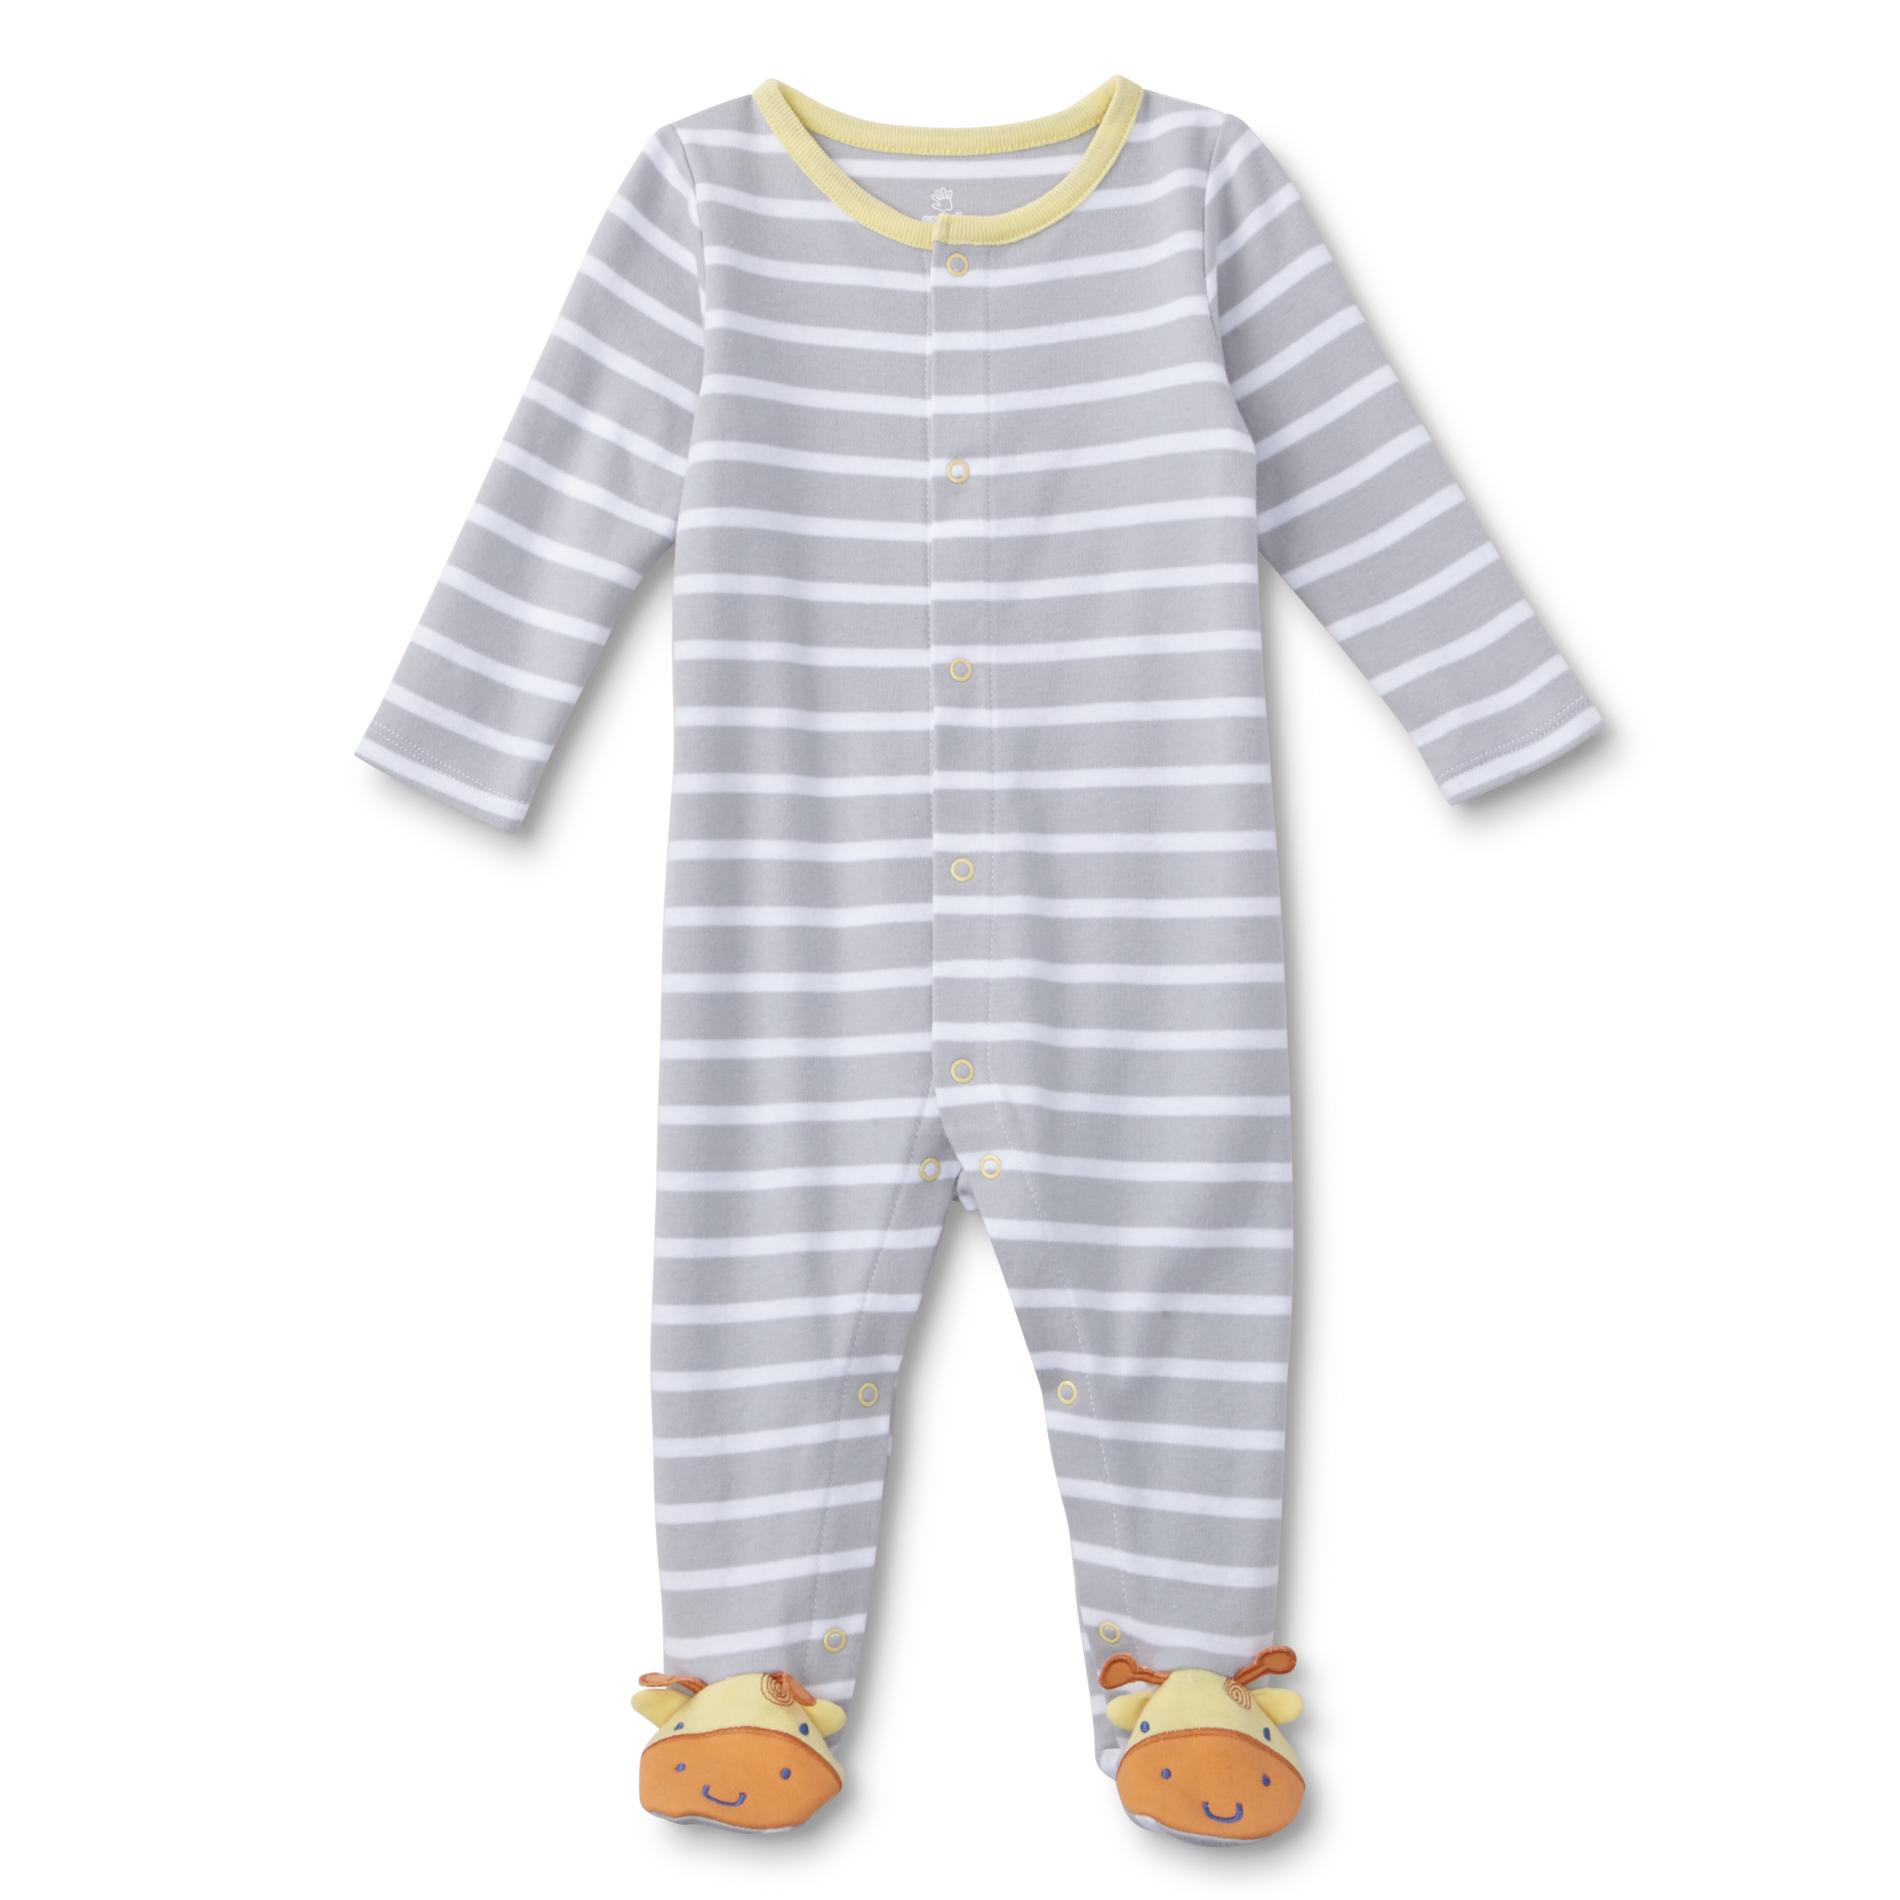 Small Wonders Newborn Boys' Sleeper Pajamas - Striped & Giraffe